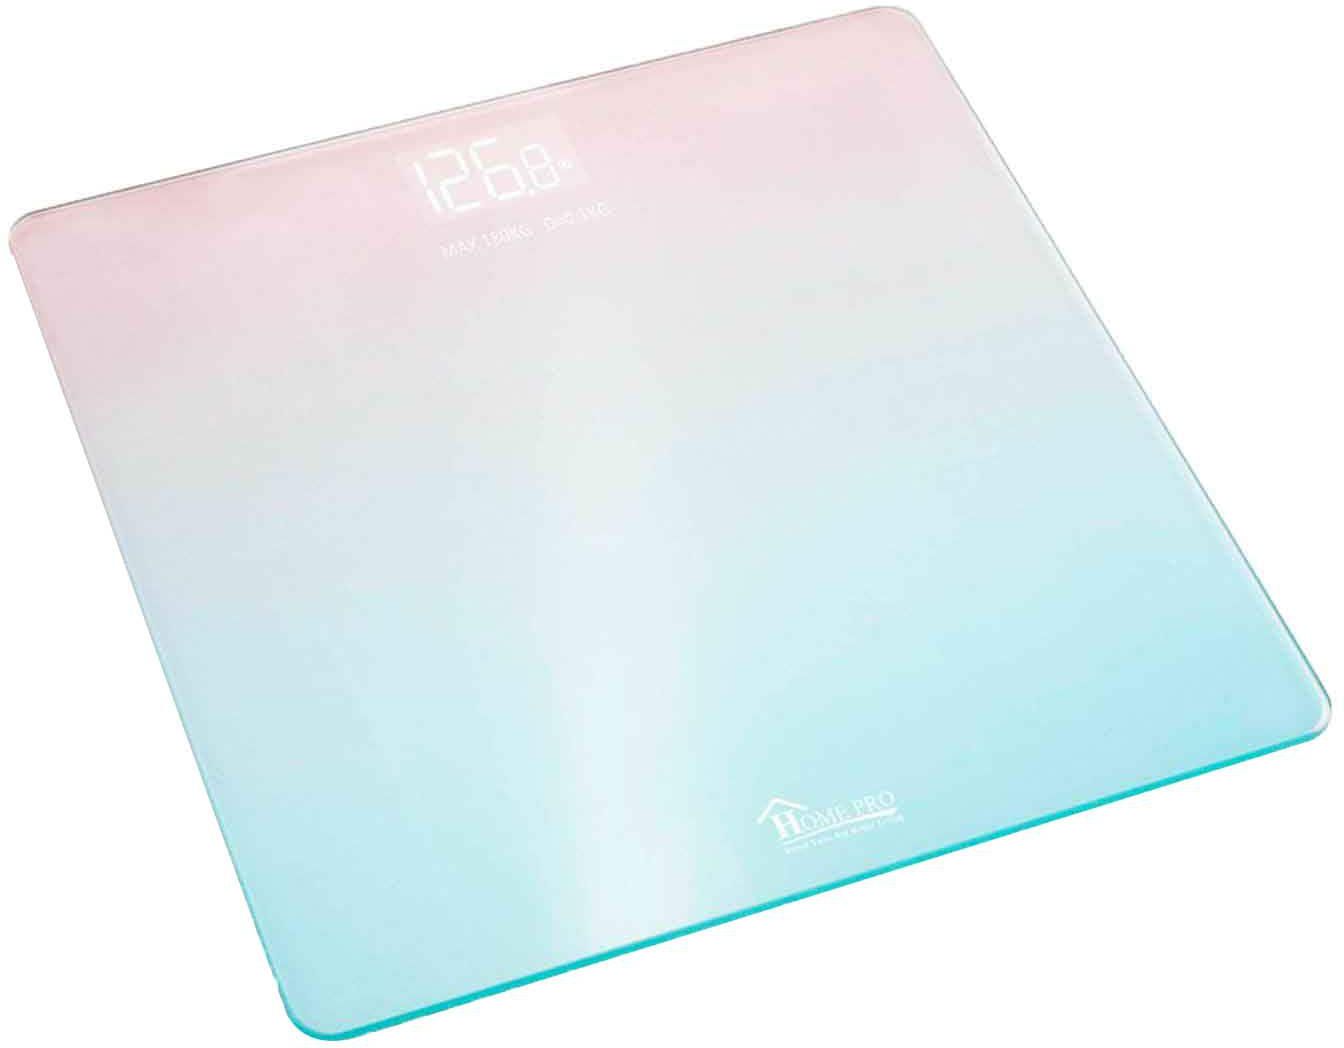 Home Pro Digital Bathroom Scale 26x26cm Pink